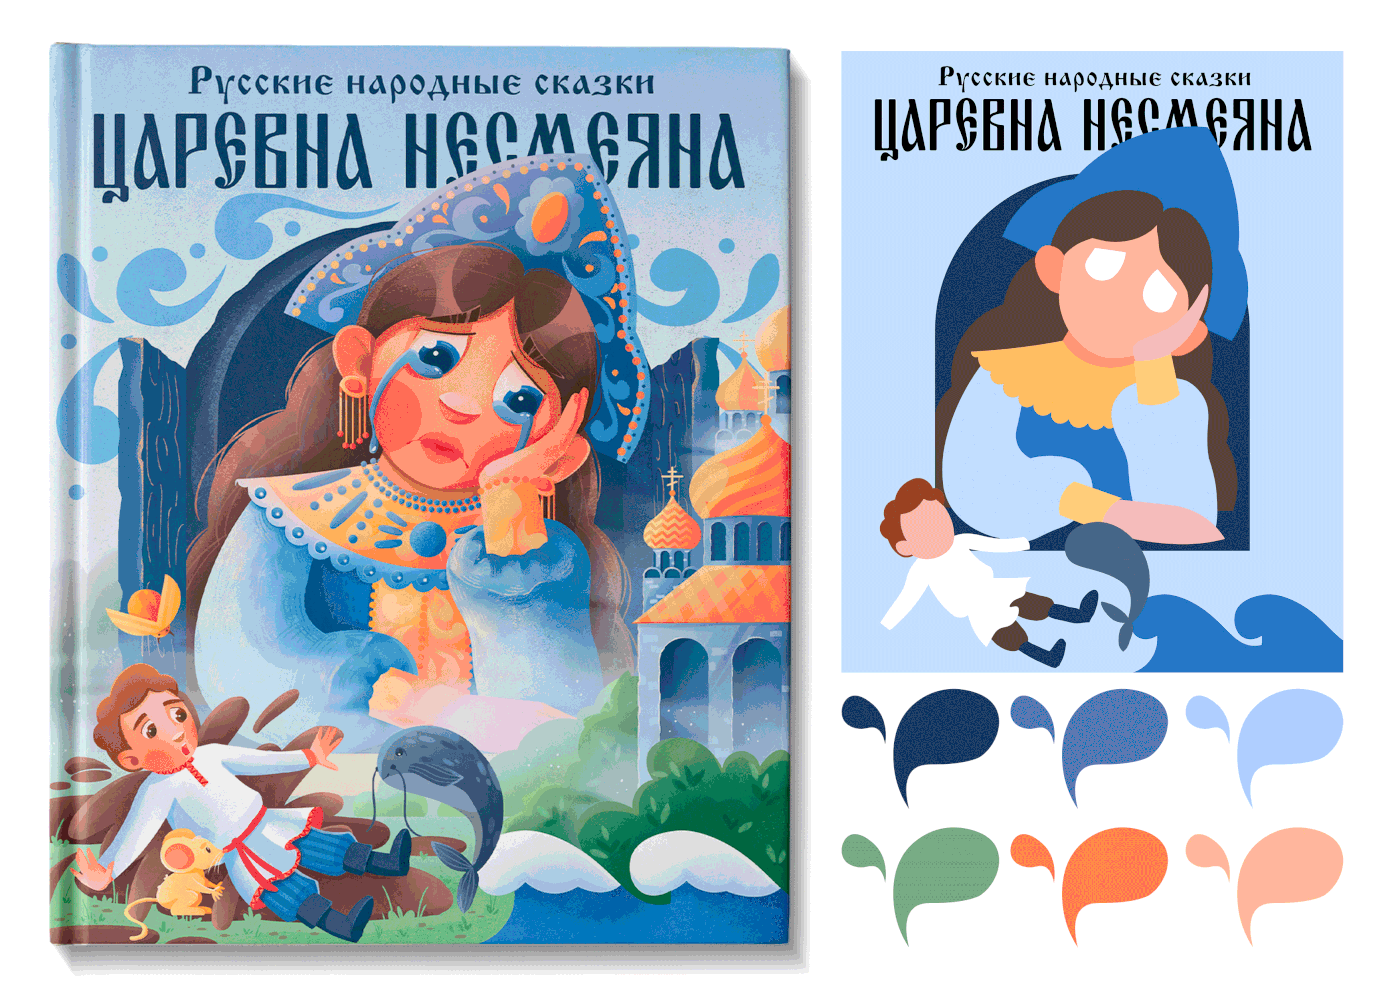 ILLUSTRATION  Digital Art  folktale Folklore Russia сказка детская иллюстрация book illustration обложка книжная иллюстрация